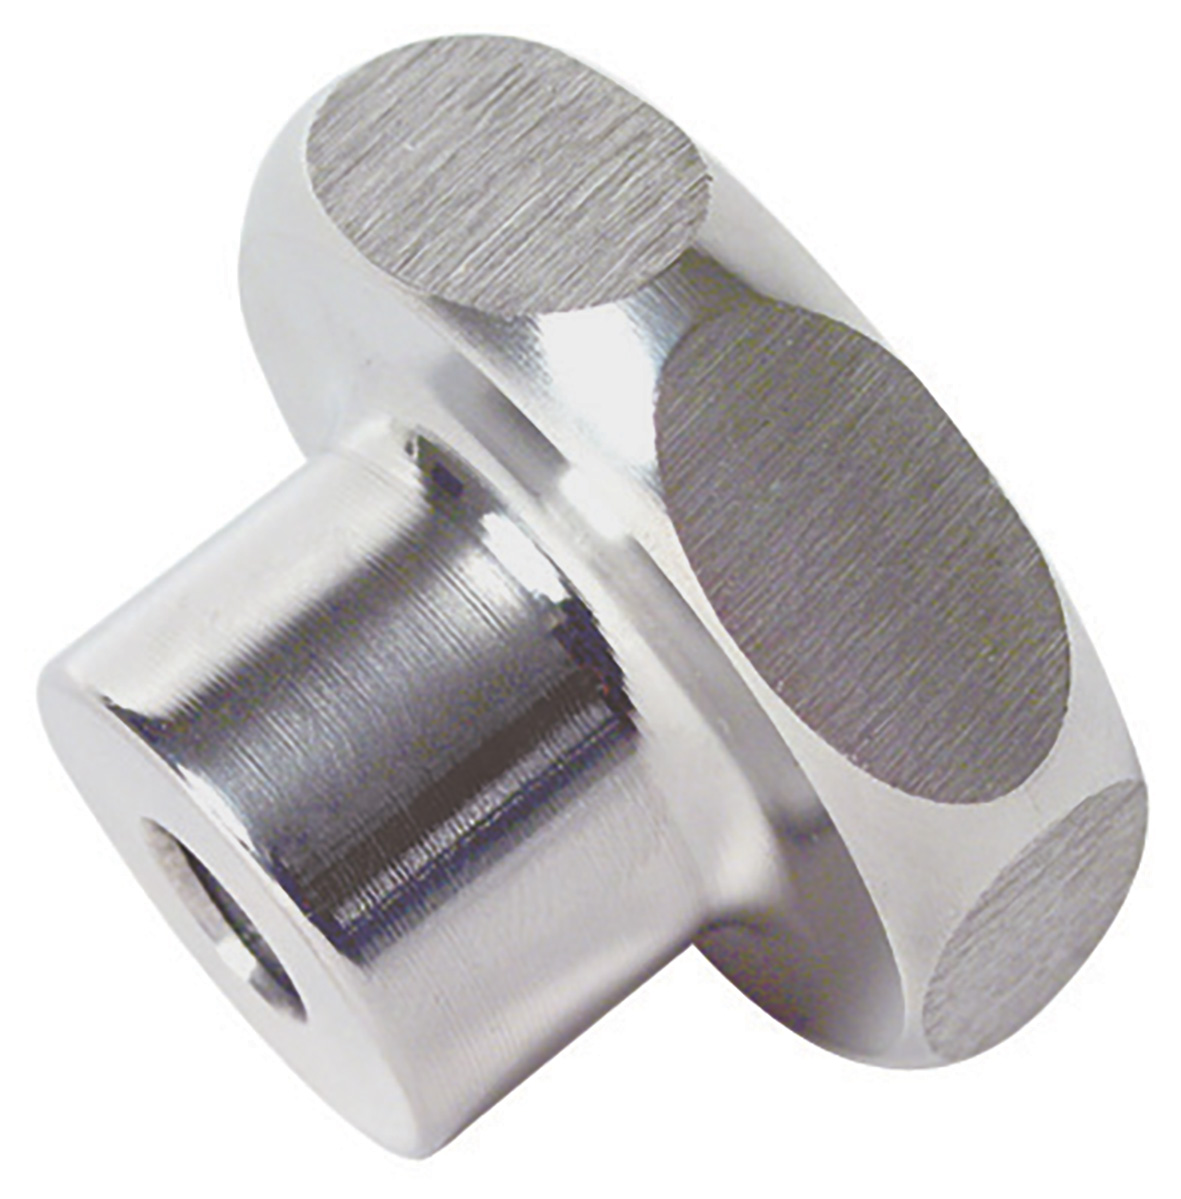 Stainless steel hexagonal headed thumb nut - Lobed handscrew - stainless steel - 